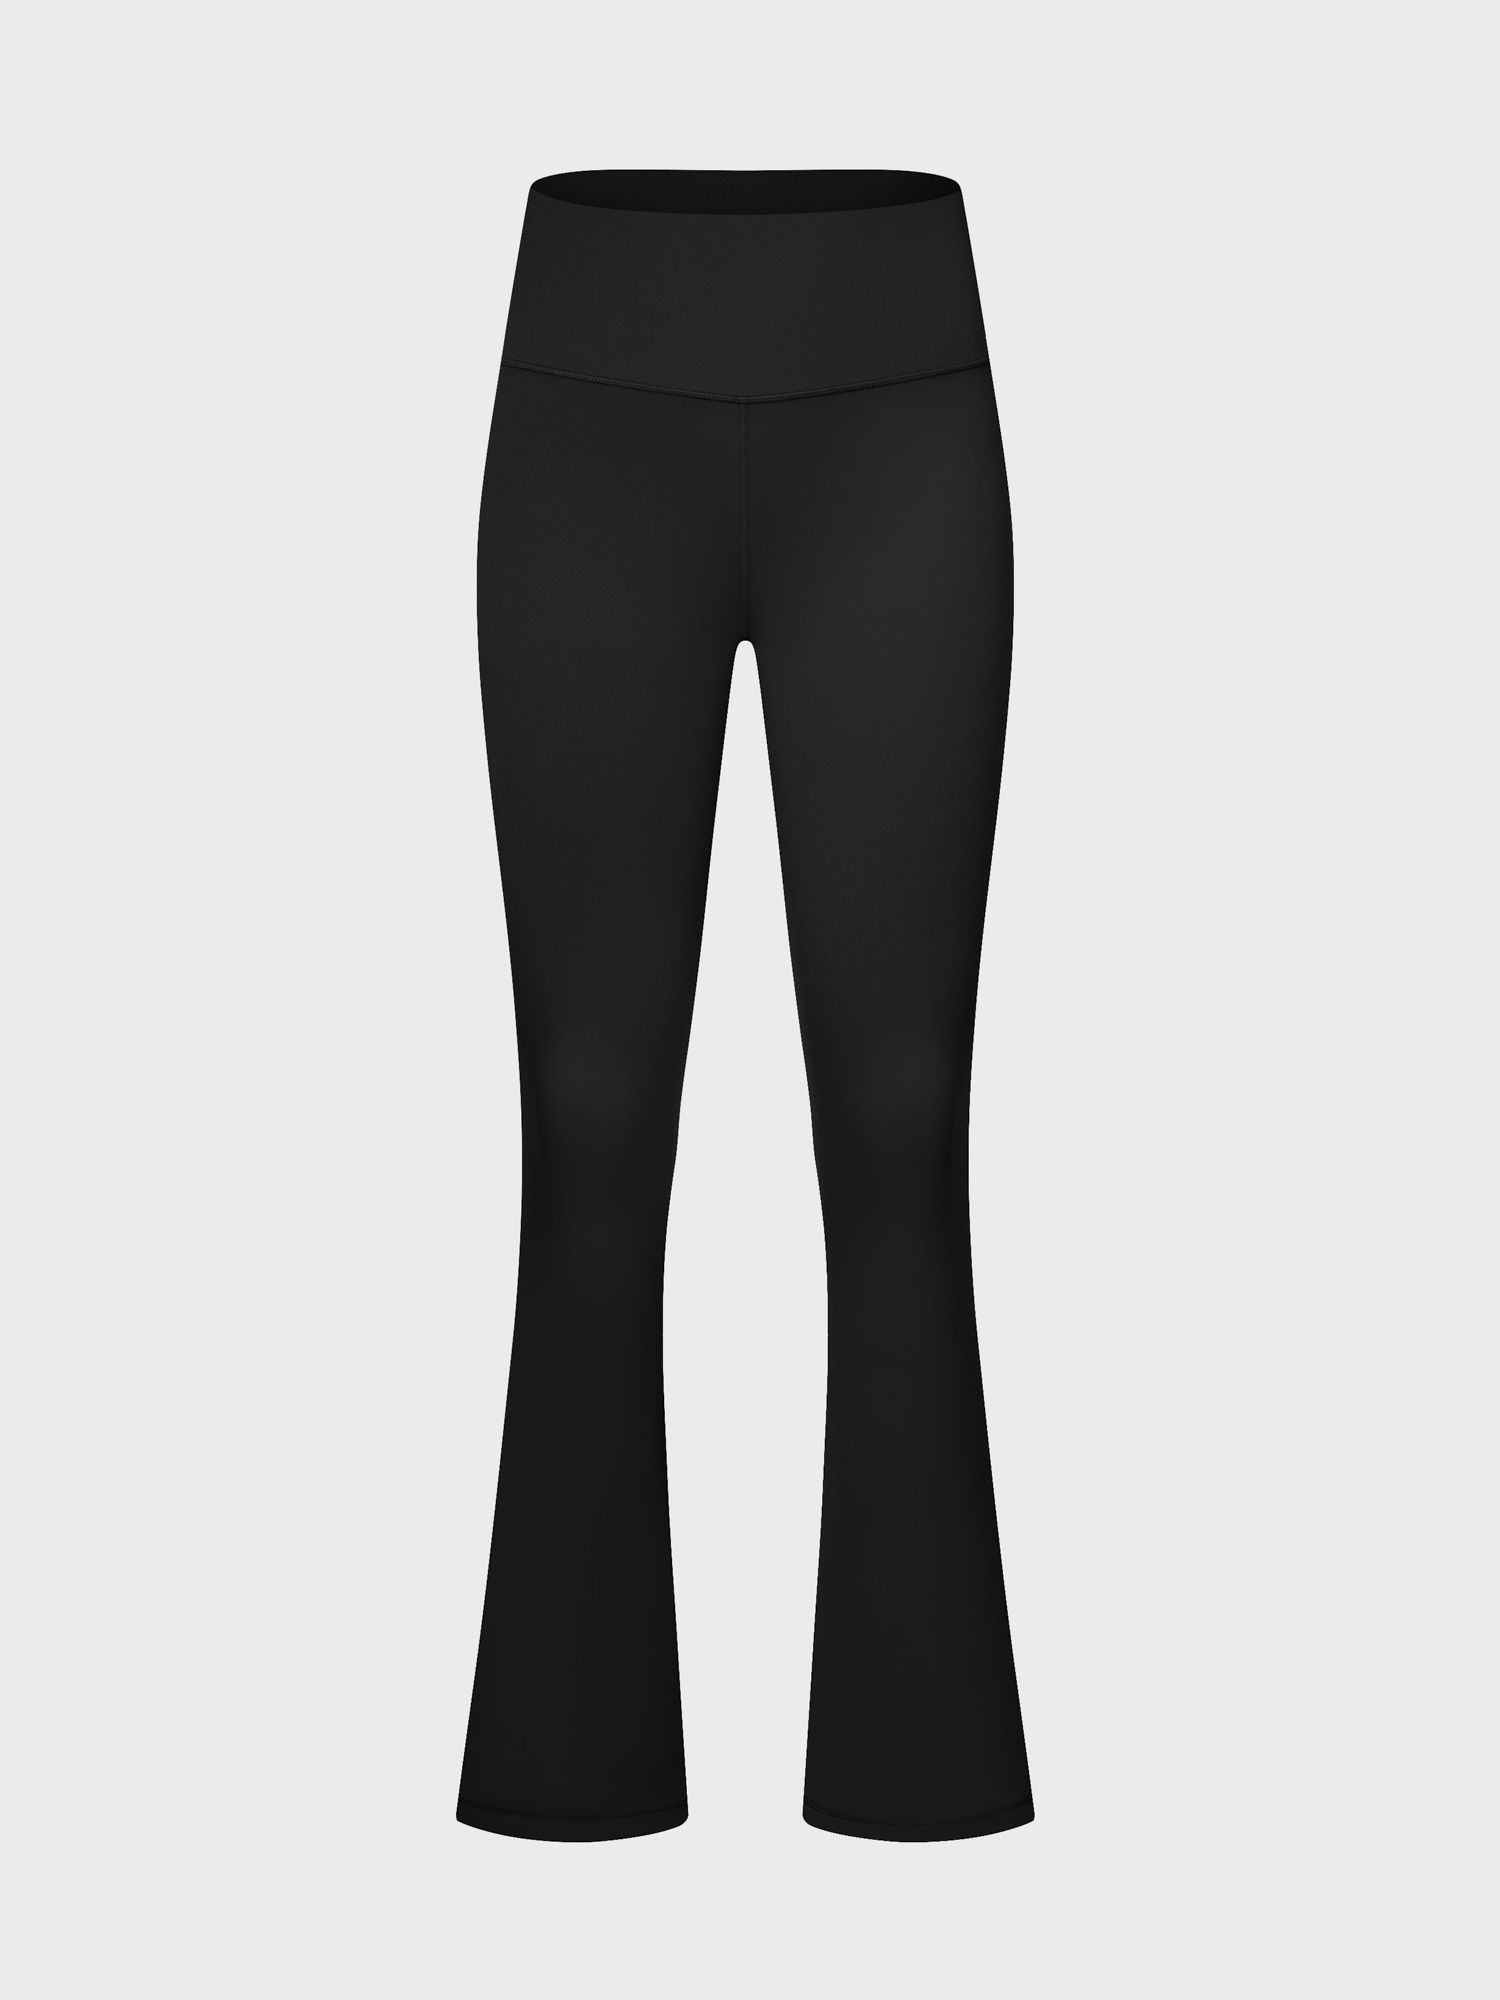 Black Midsize Slim High Stretch Flared Sports Pants Black Flared Leggings outfit for women | Hemwave - Midsize Fashion